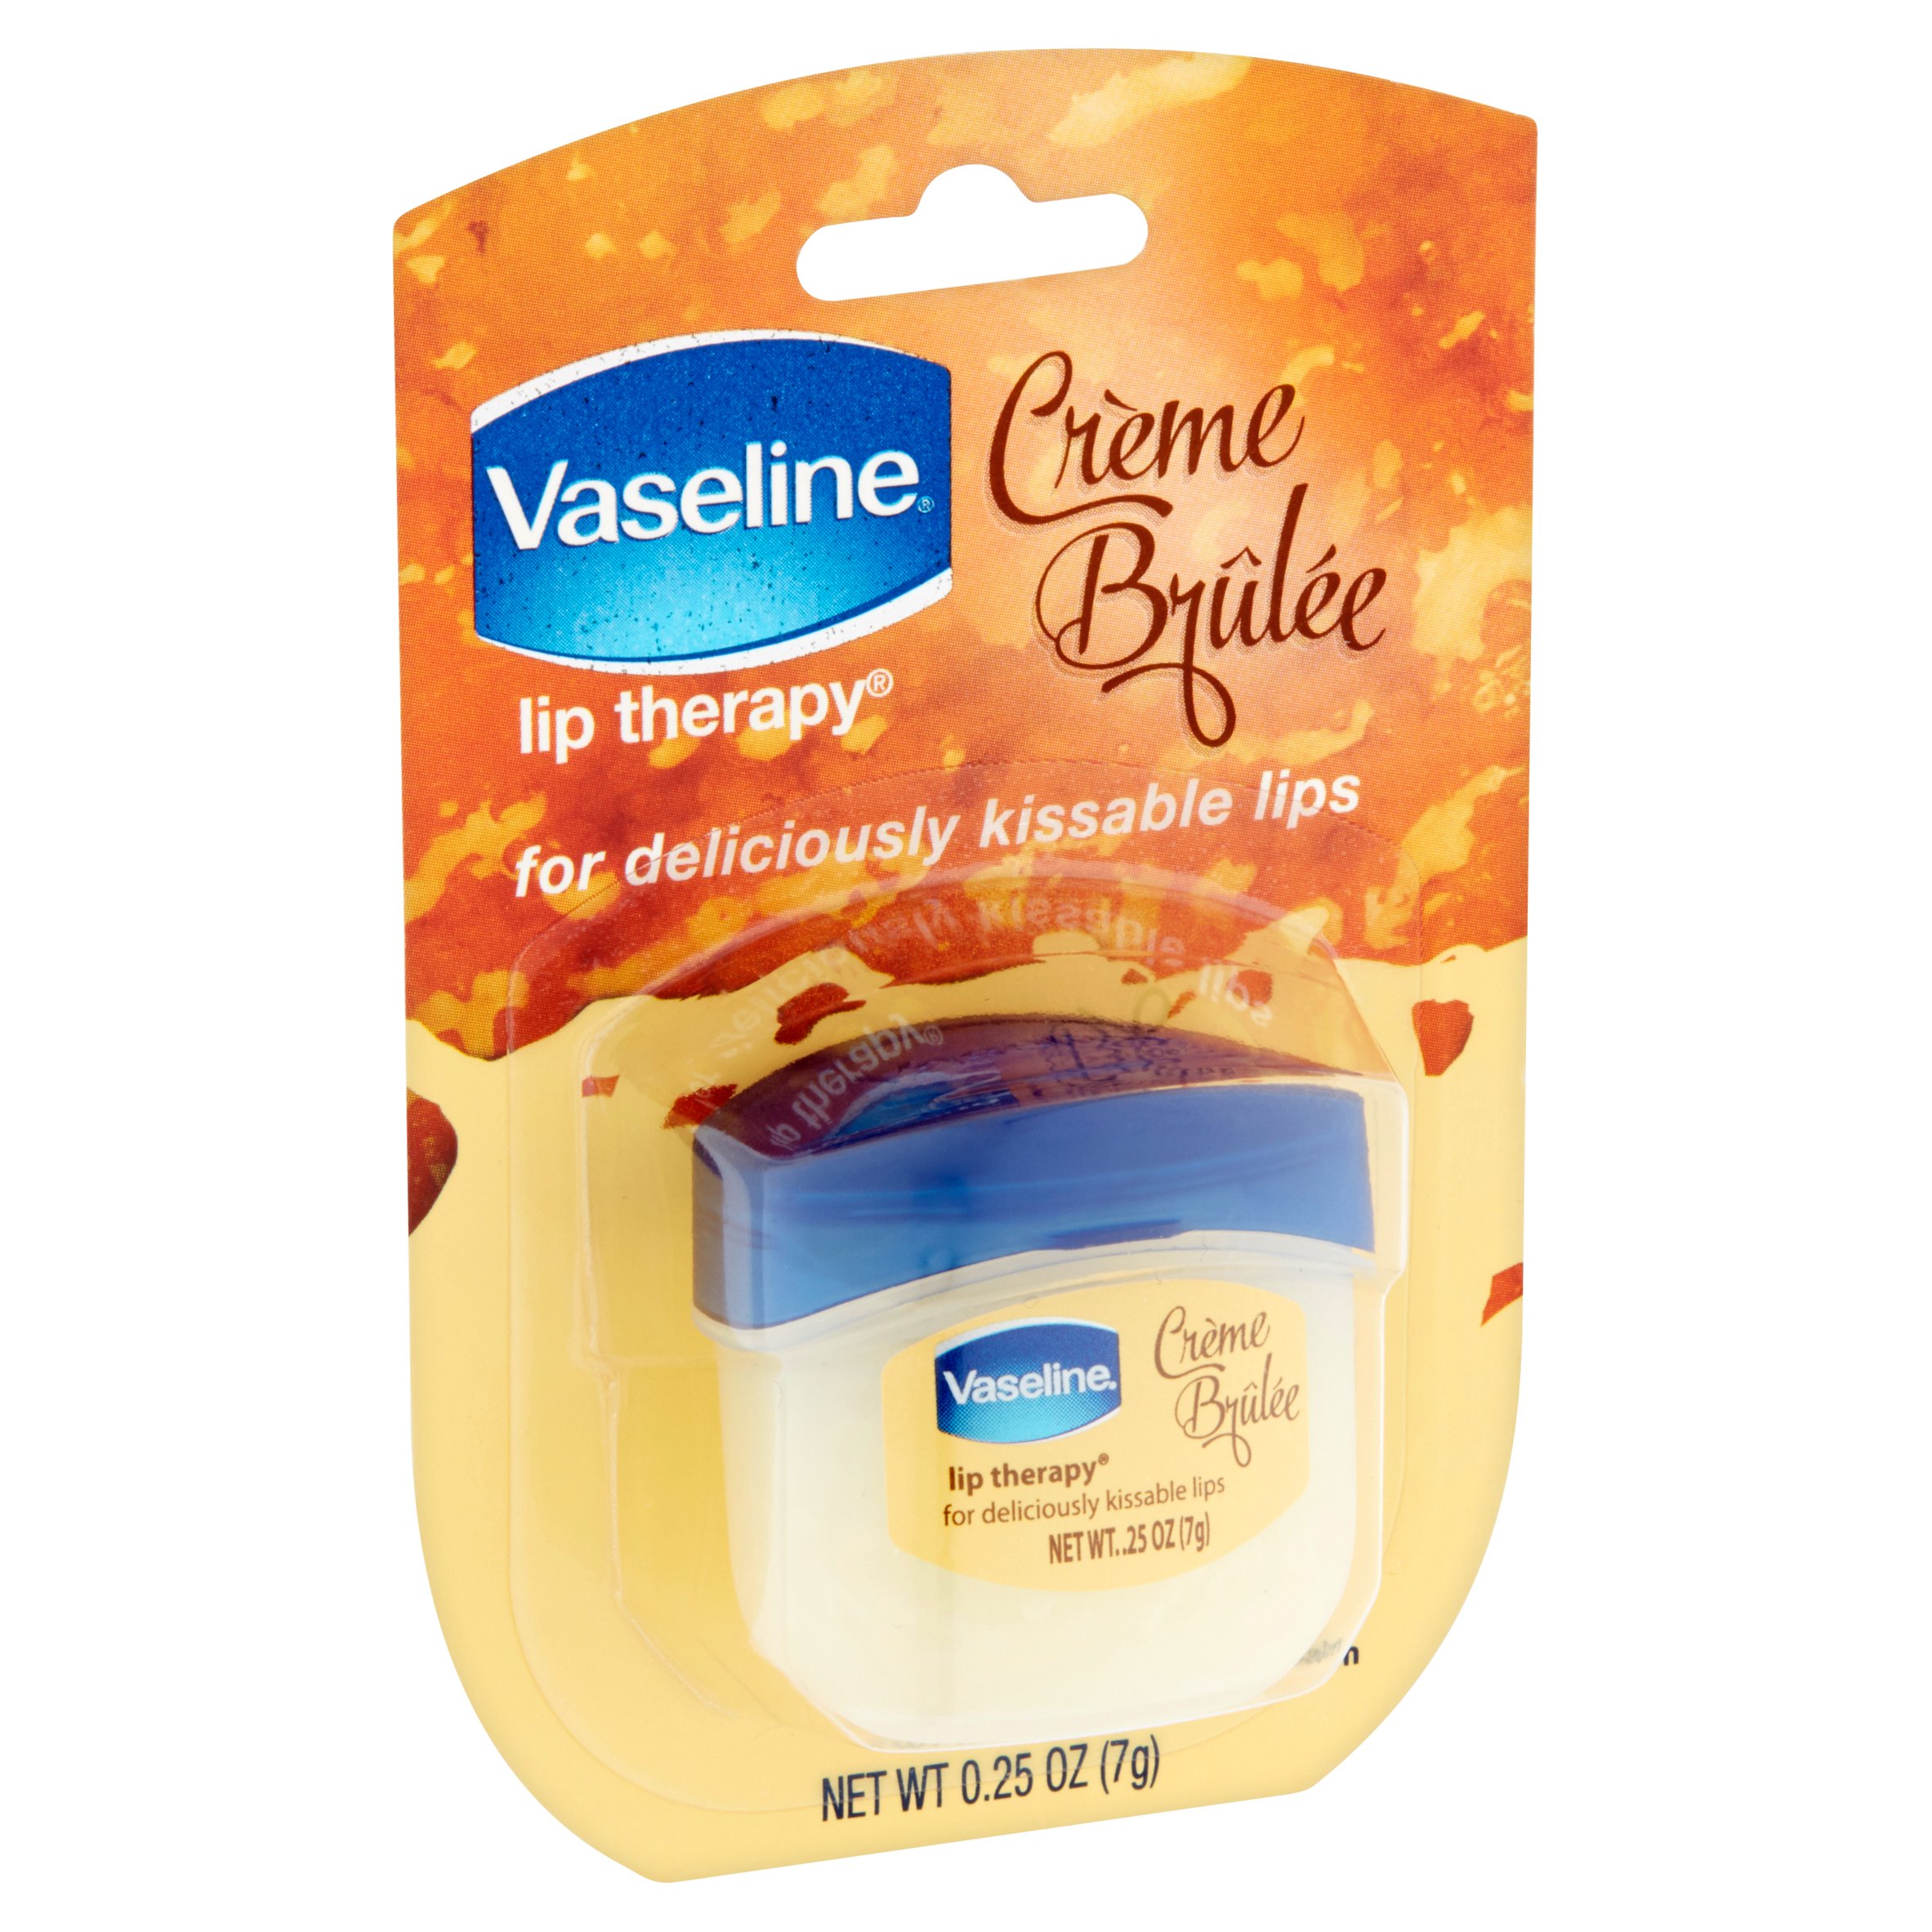 Vaseline Creme Brulee Lip Therapy Lip Balm, 0.25 oz - image 2 of 4